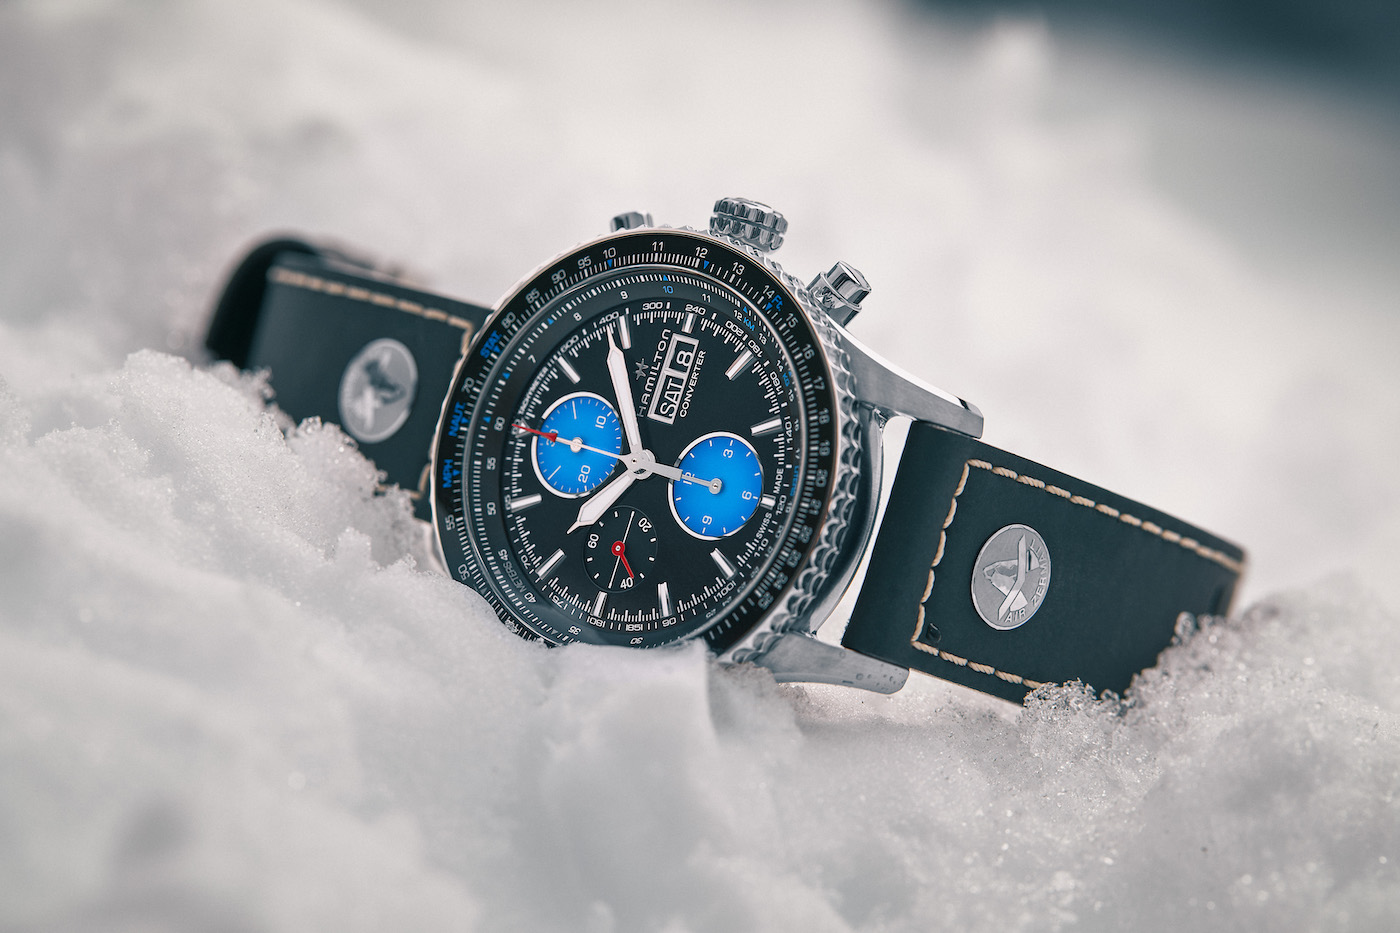 Presenting Hamilton's special timepiece for Air Zermatt 